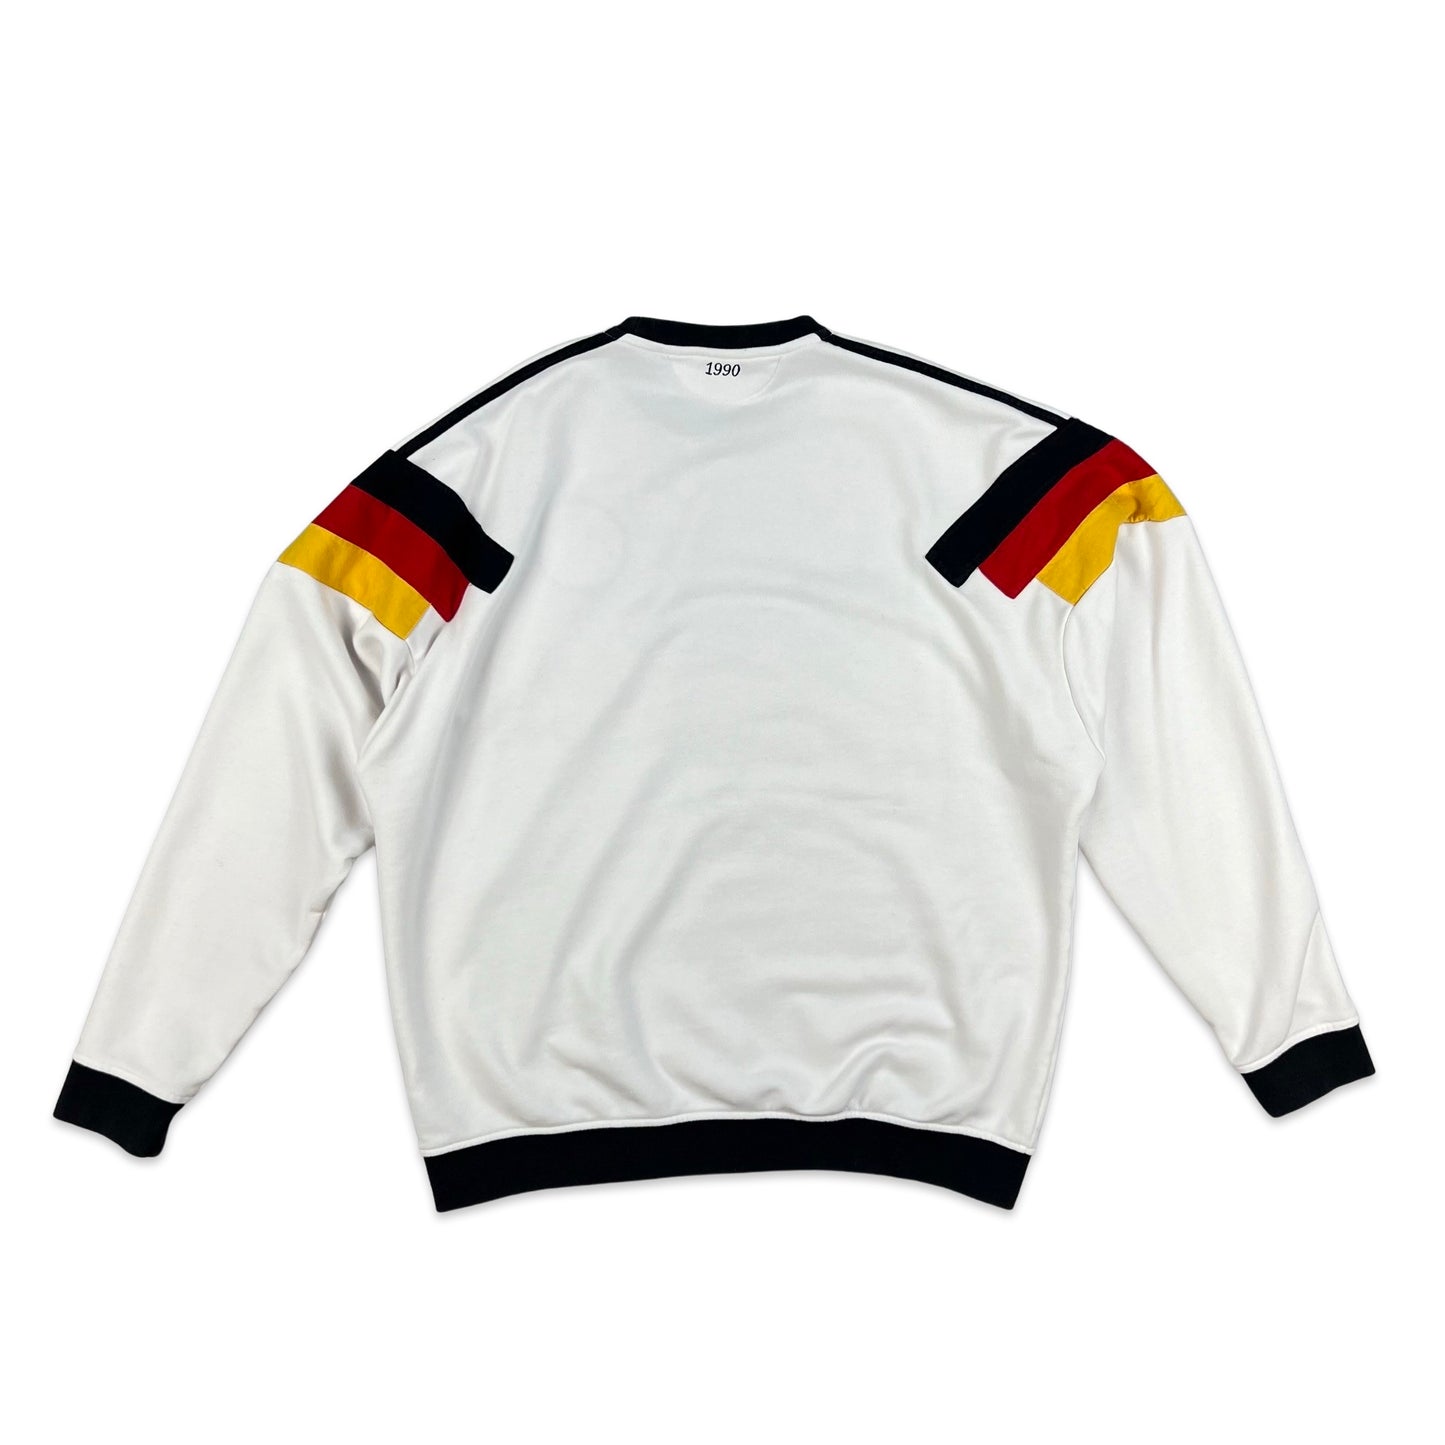 00s Vintage White Adidas German Football Sweatshirt Black Red Yellow Graphic M L XL